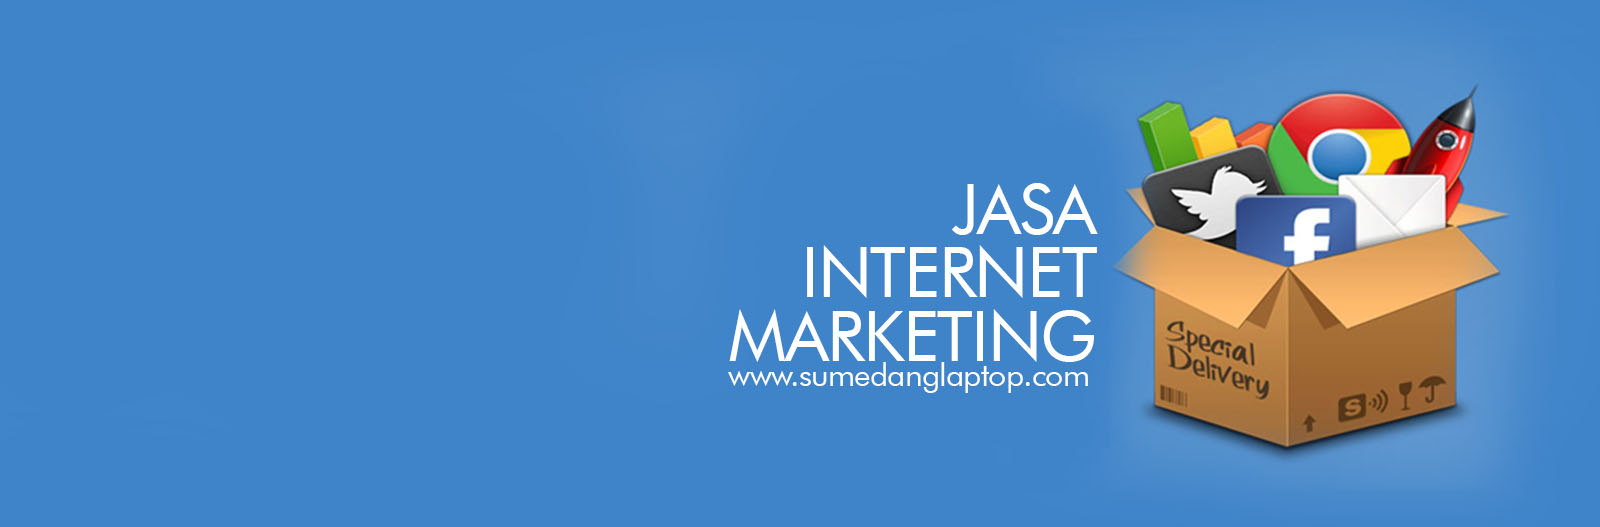 JASA INTERNET MARKETING